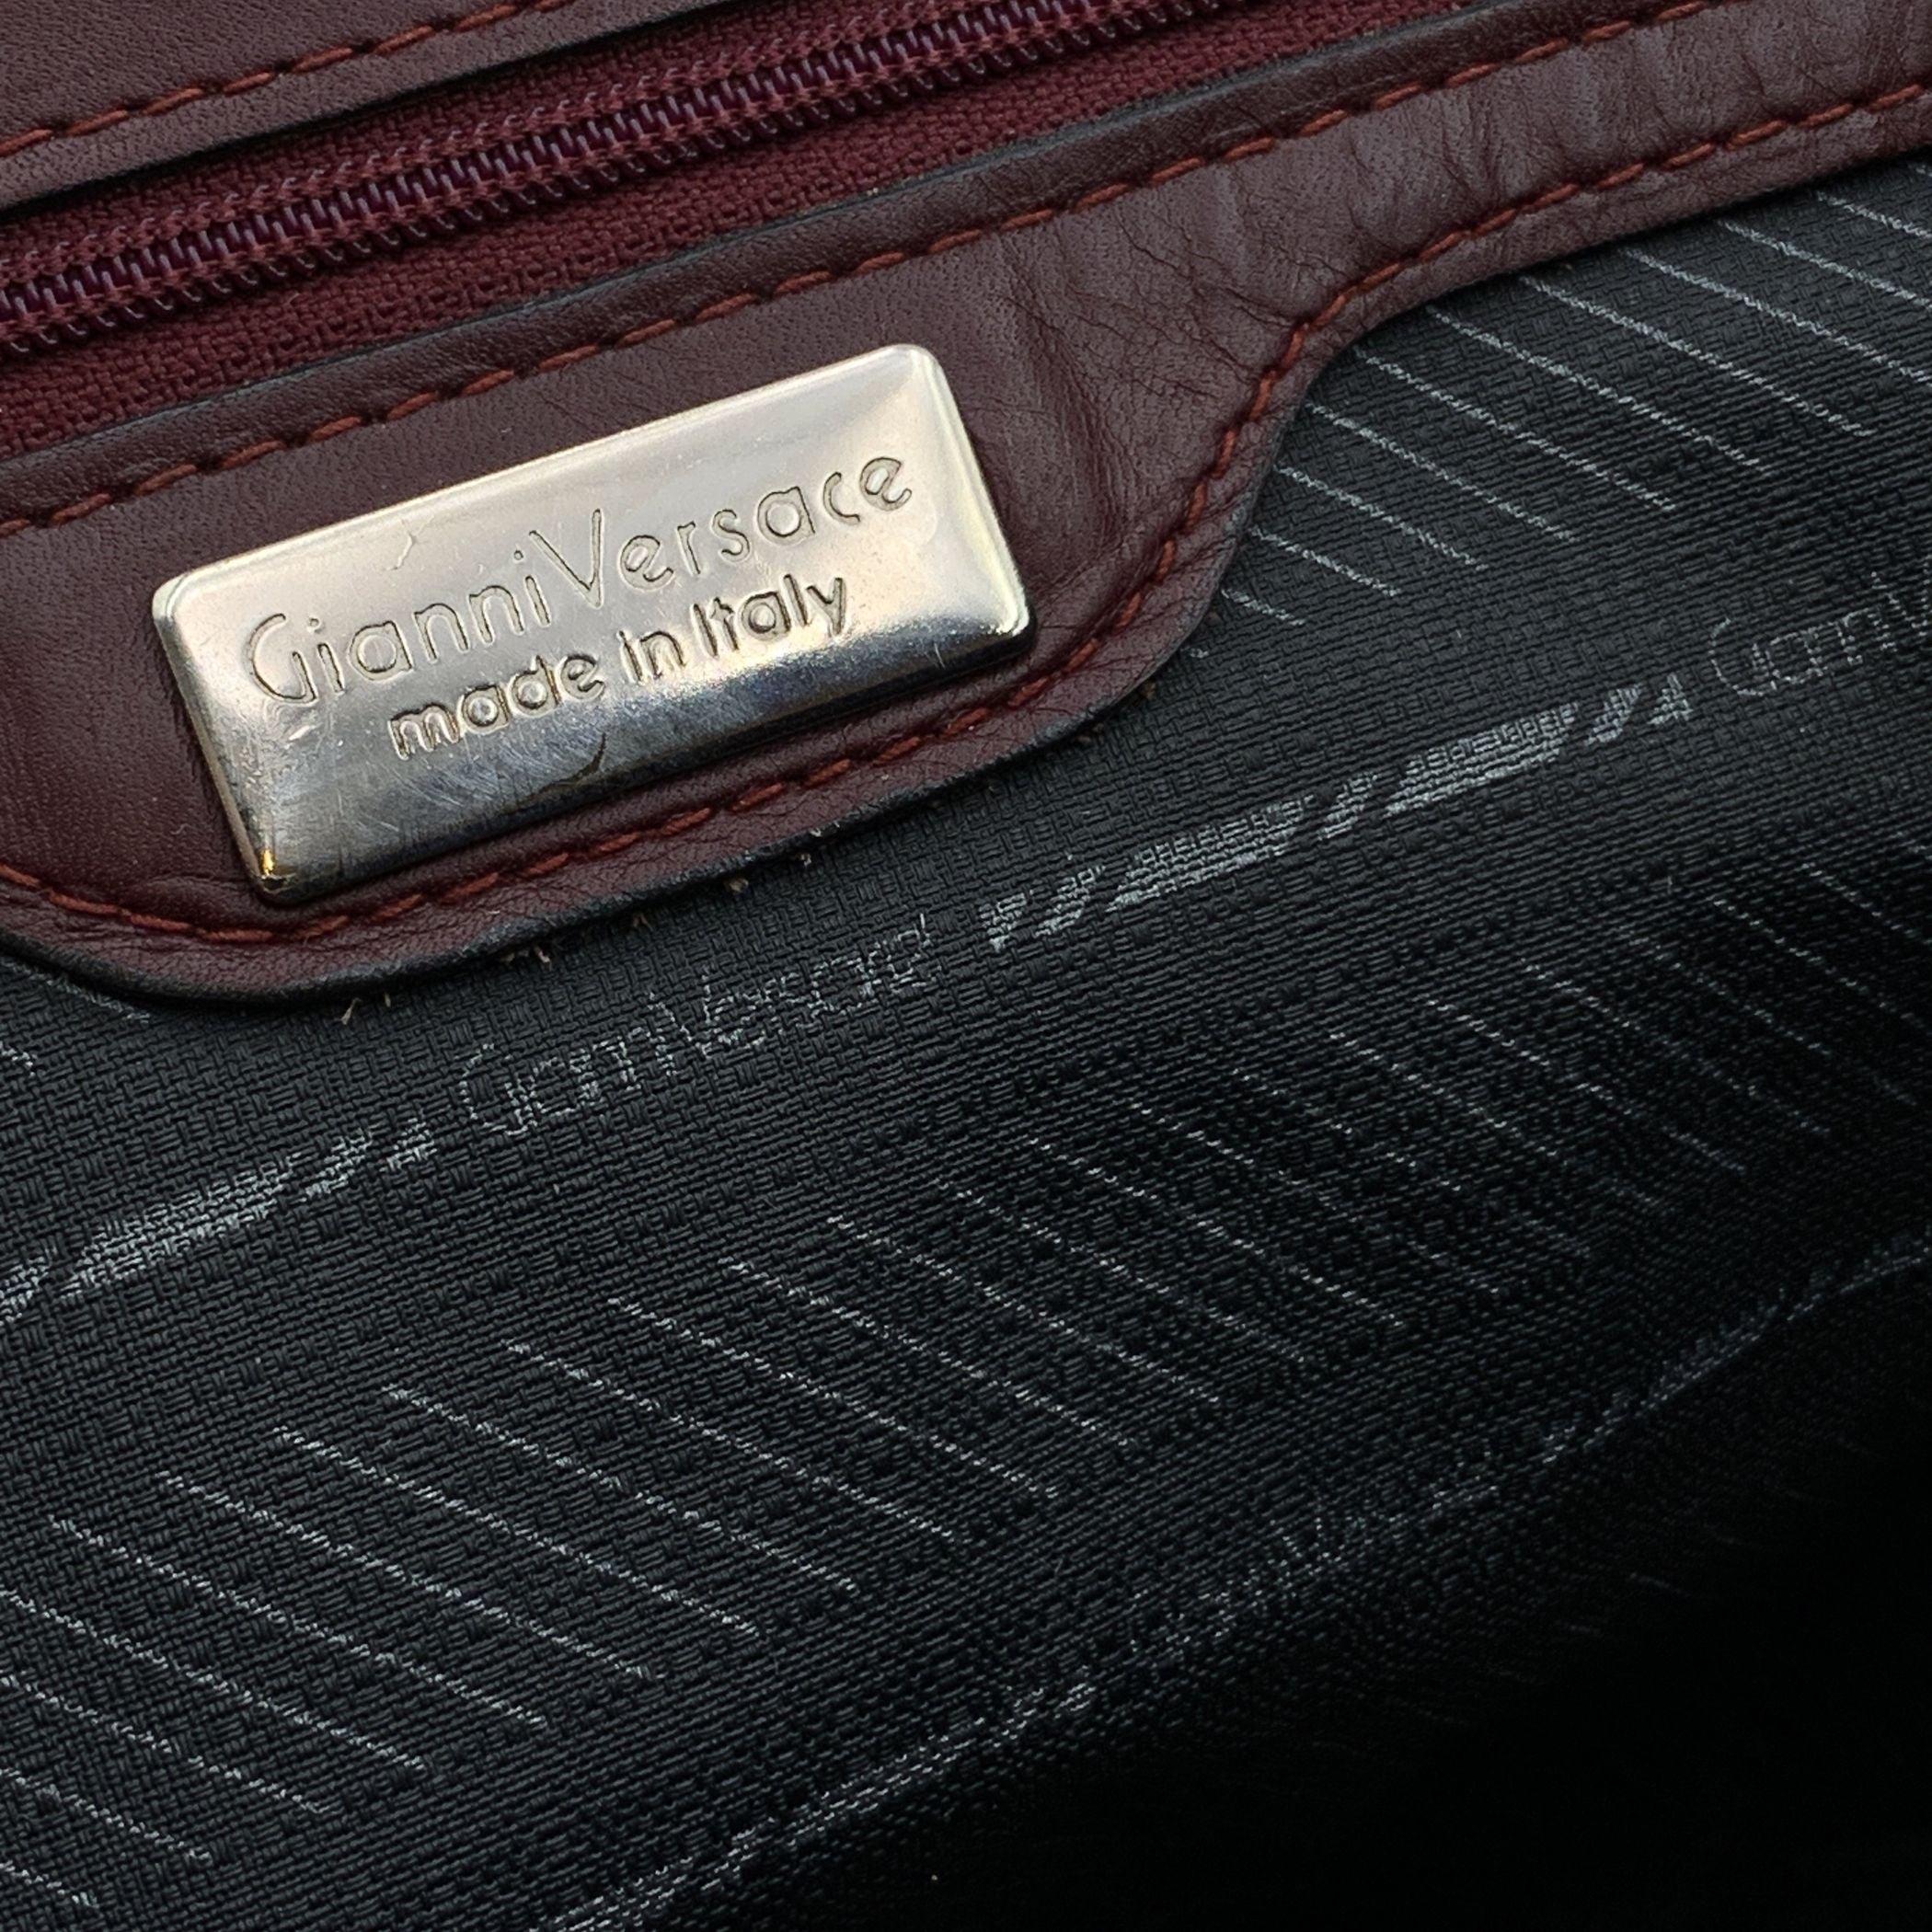 Gianni Versace Vintage Burgundy Embossed Leather Handbag Satchel For Sale 3